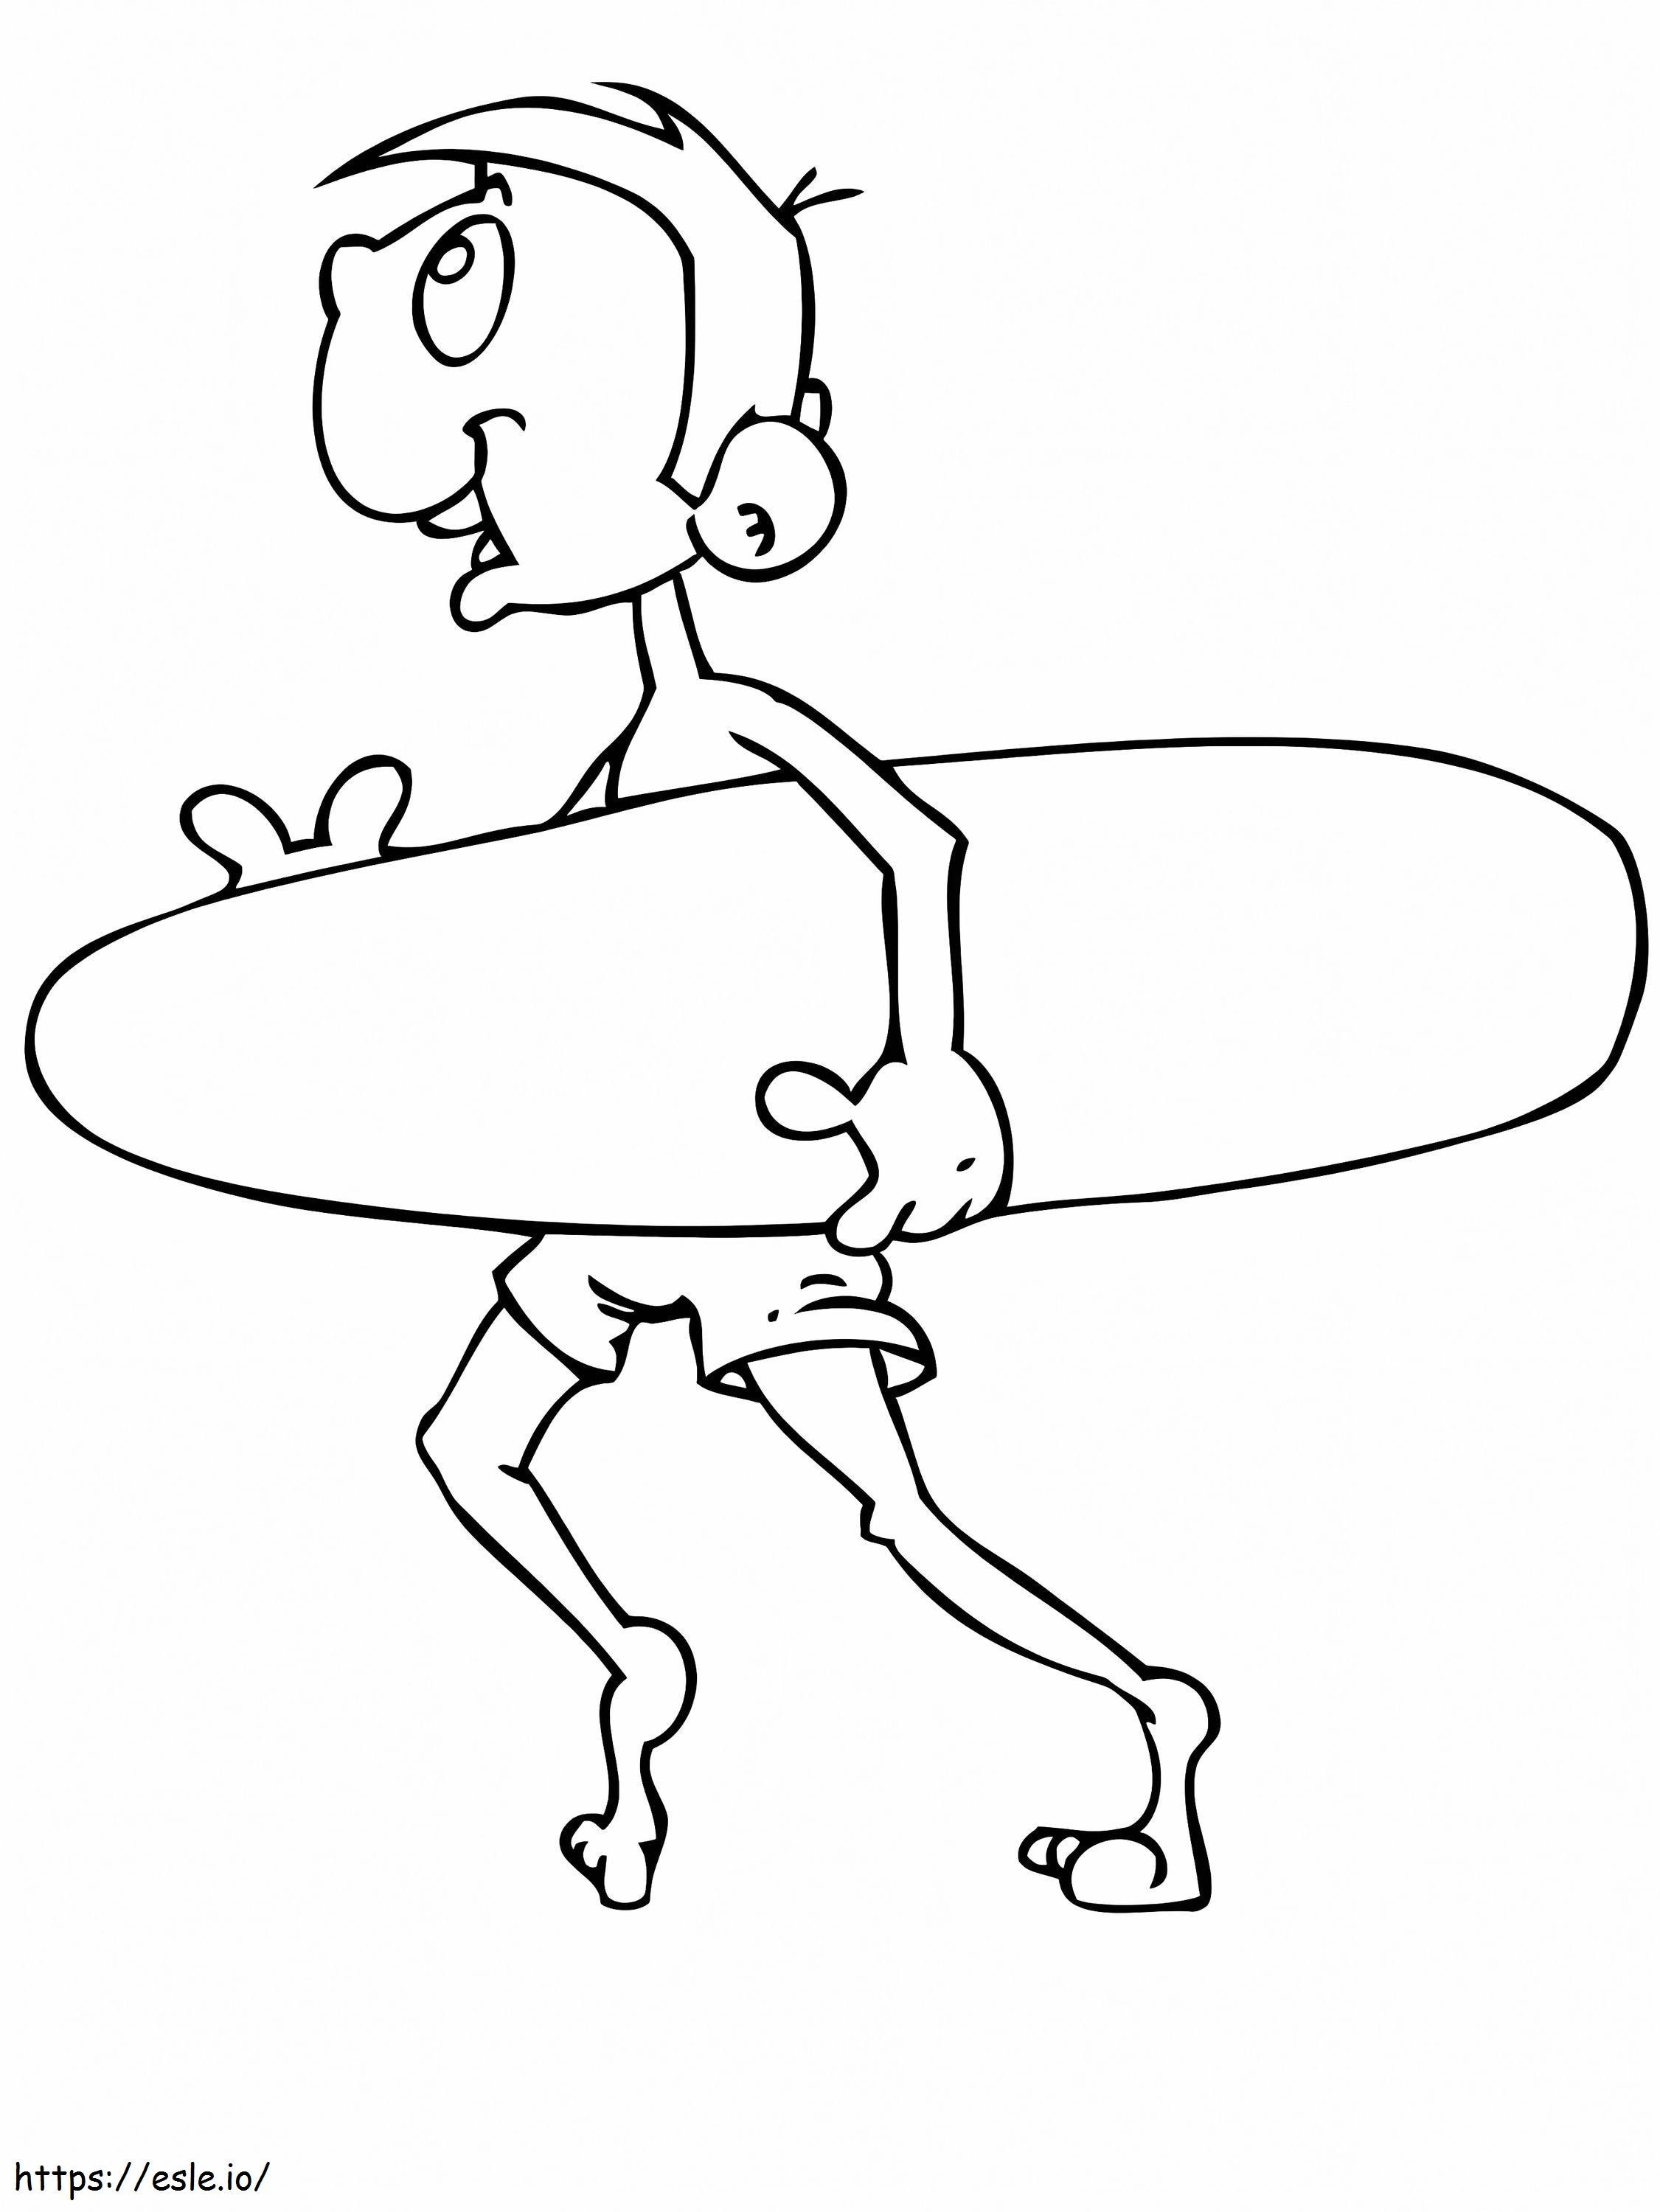 Menino com prancha de surf para colorir